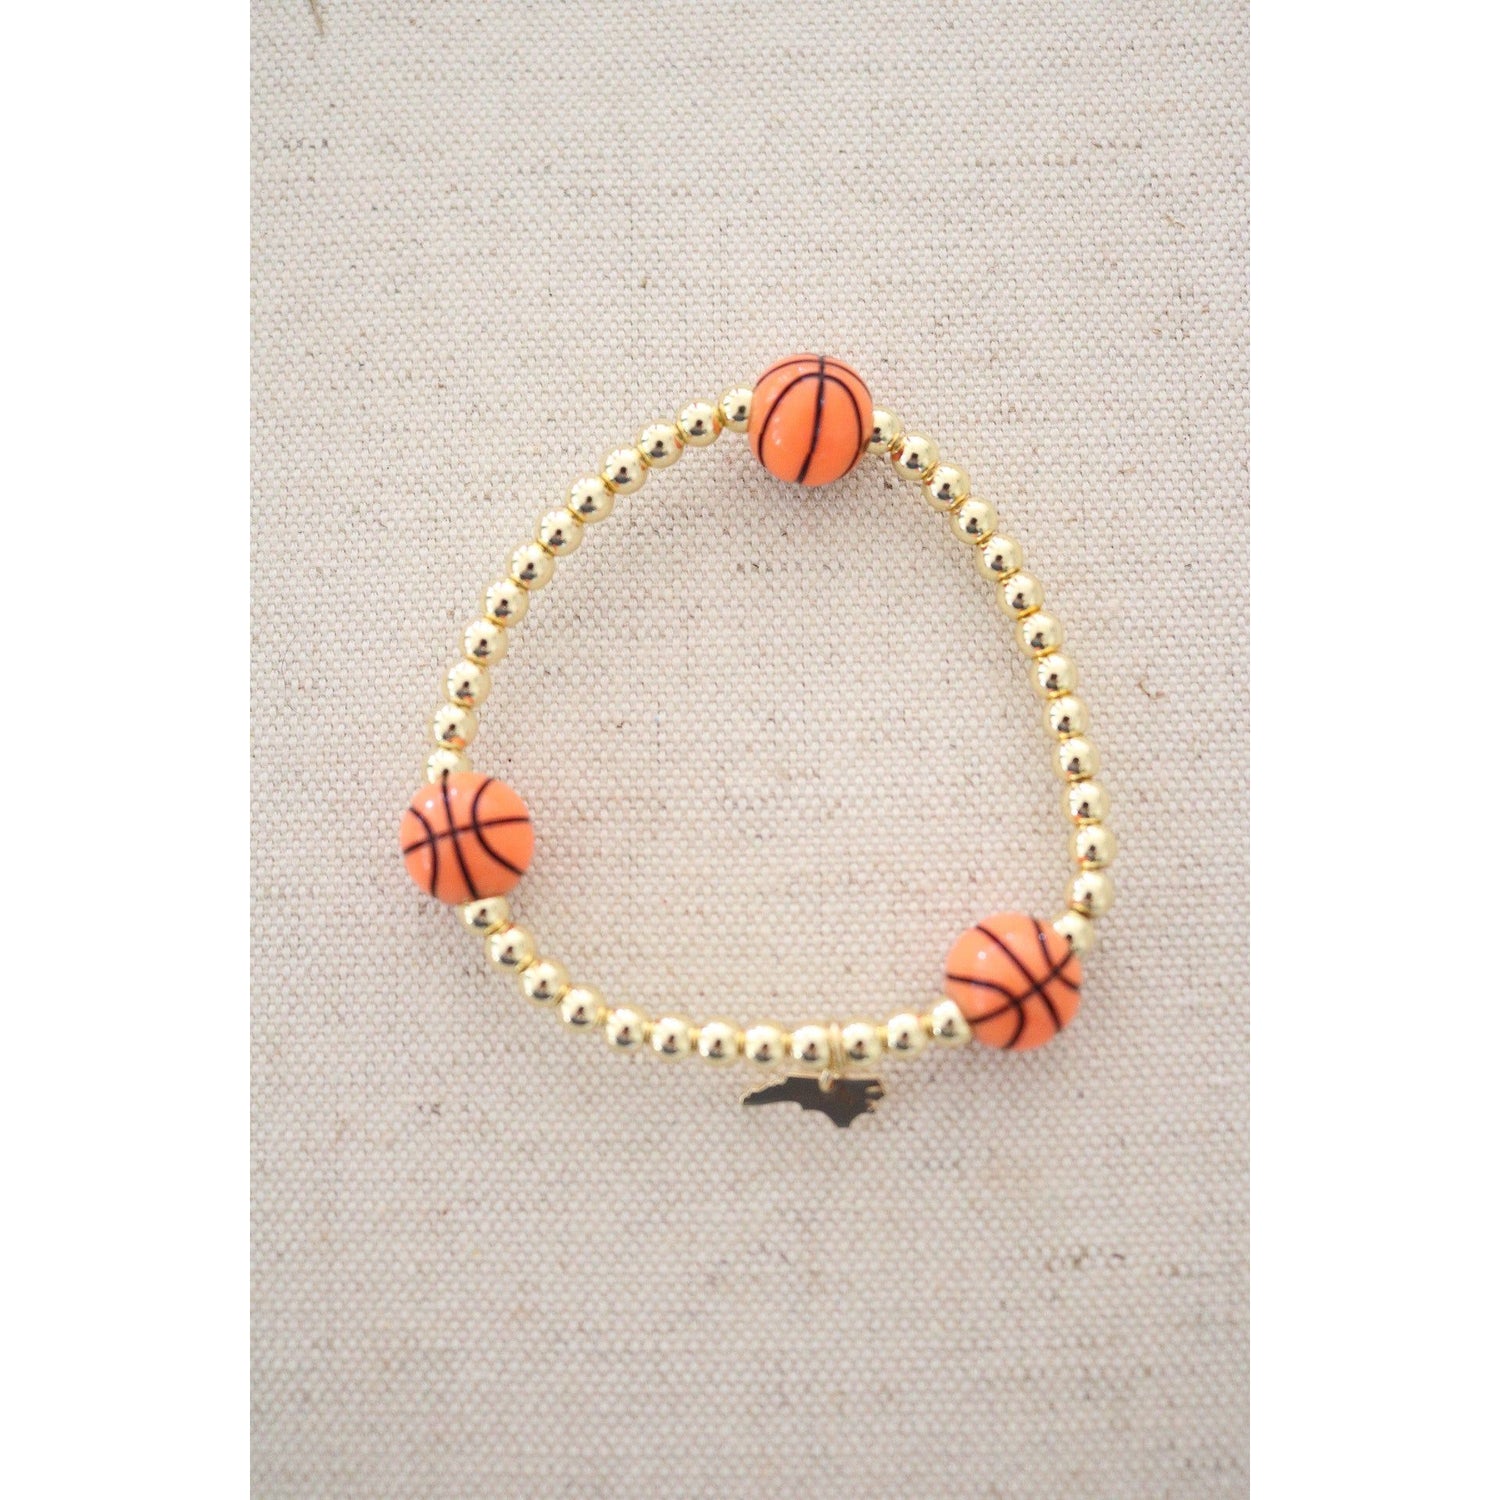 basketball theme stretch bracelet with gold hematite beads